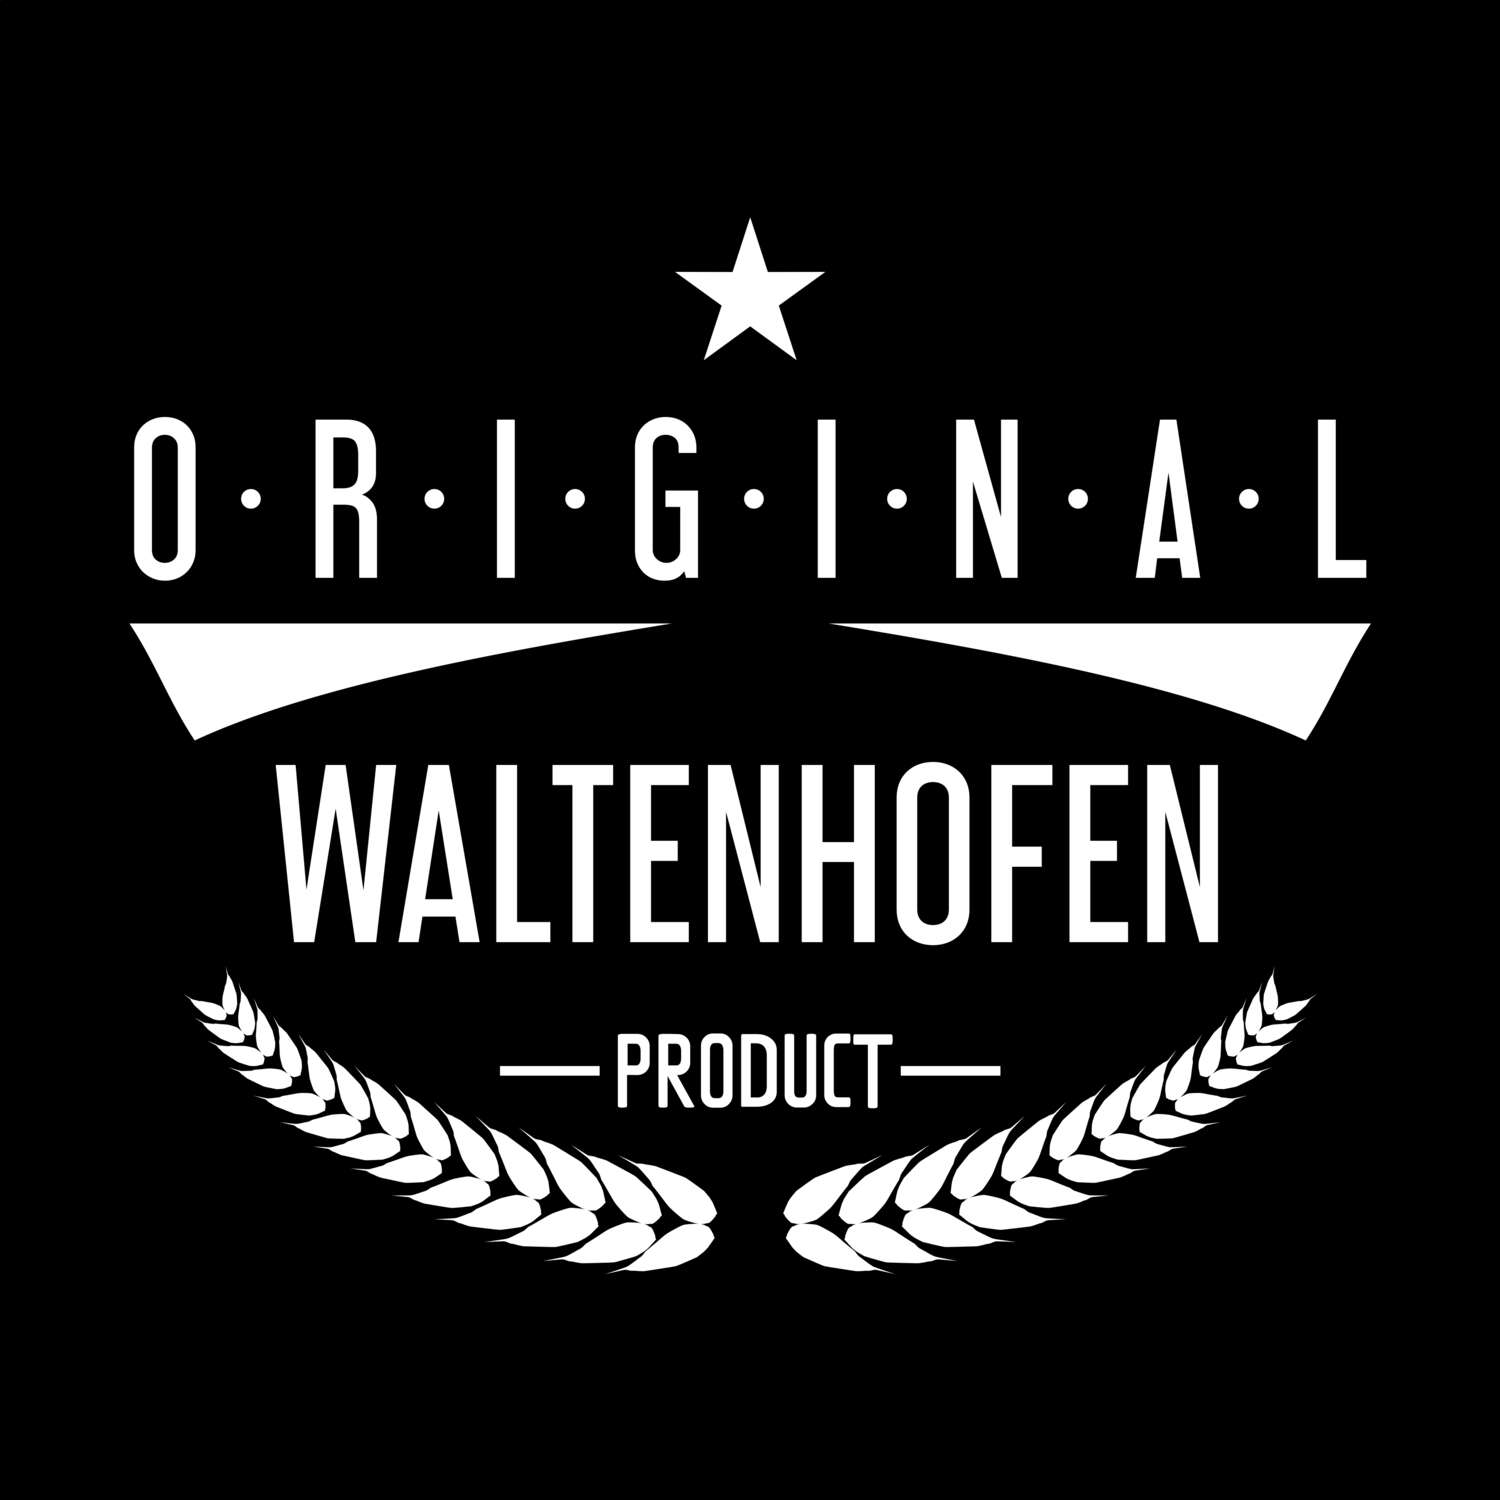 Waltenhofen T-Shirt »Original Product«